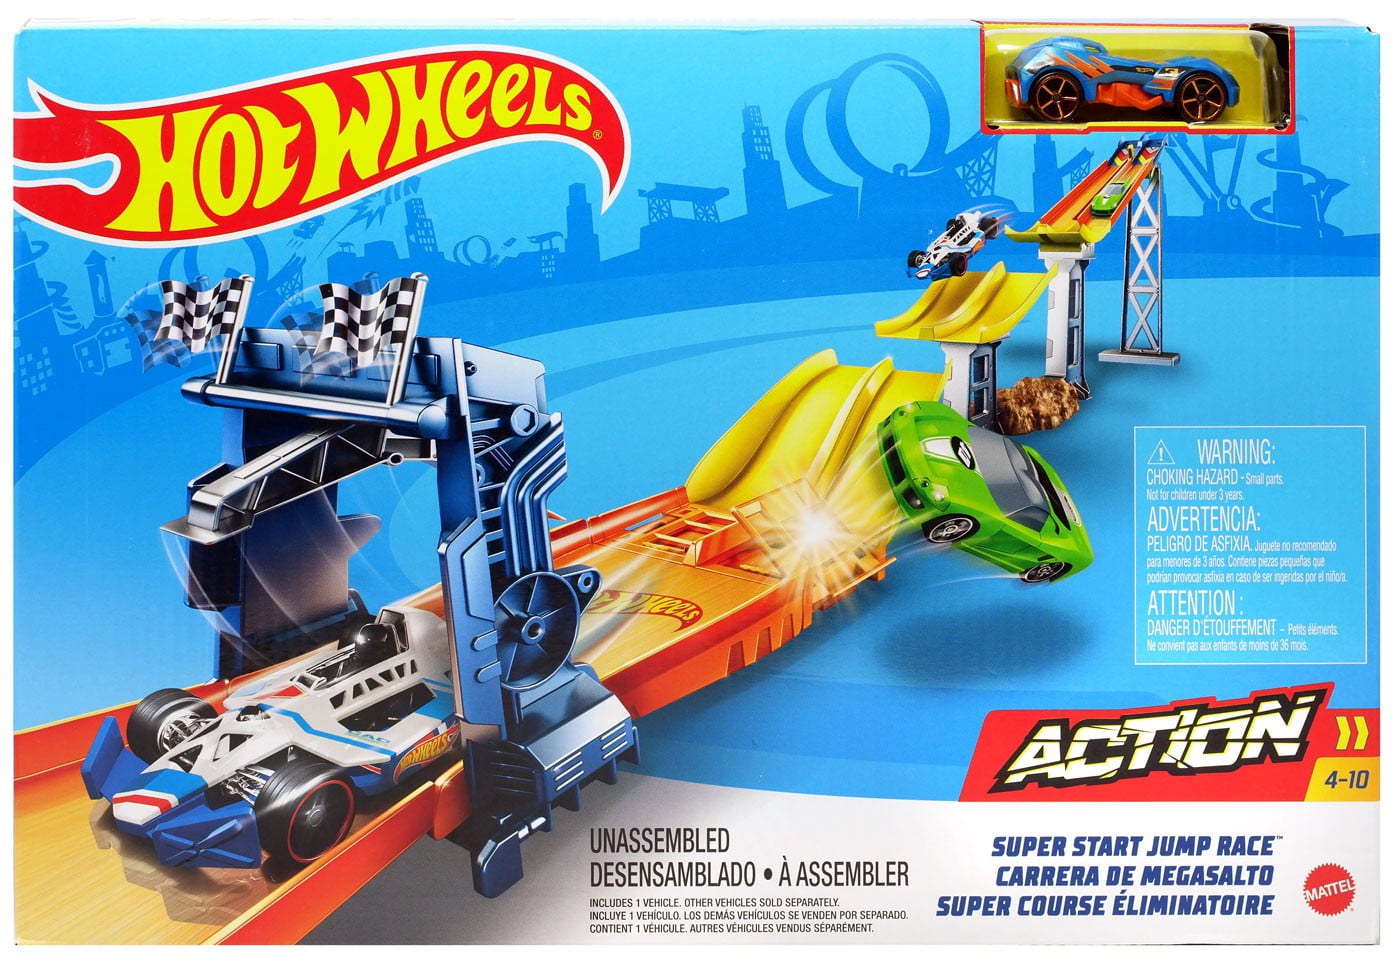 Hot Wheels Criss Cross Crash Track Set Toy Vehicles Accessories Racing New